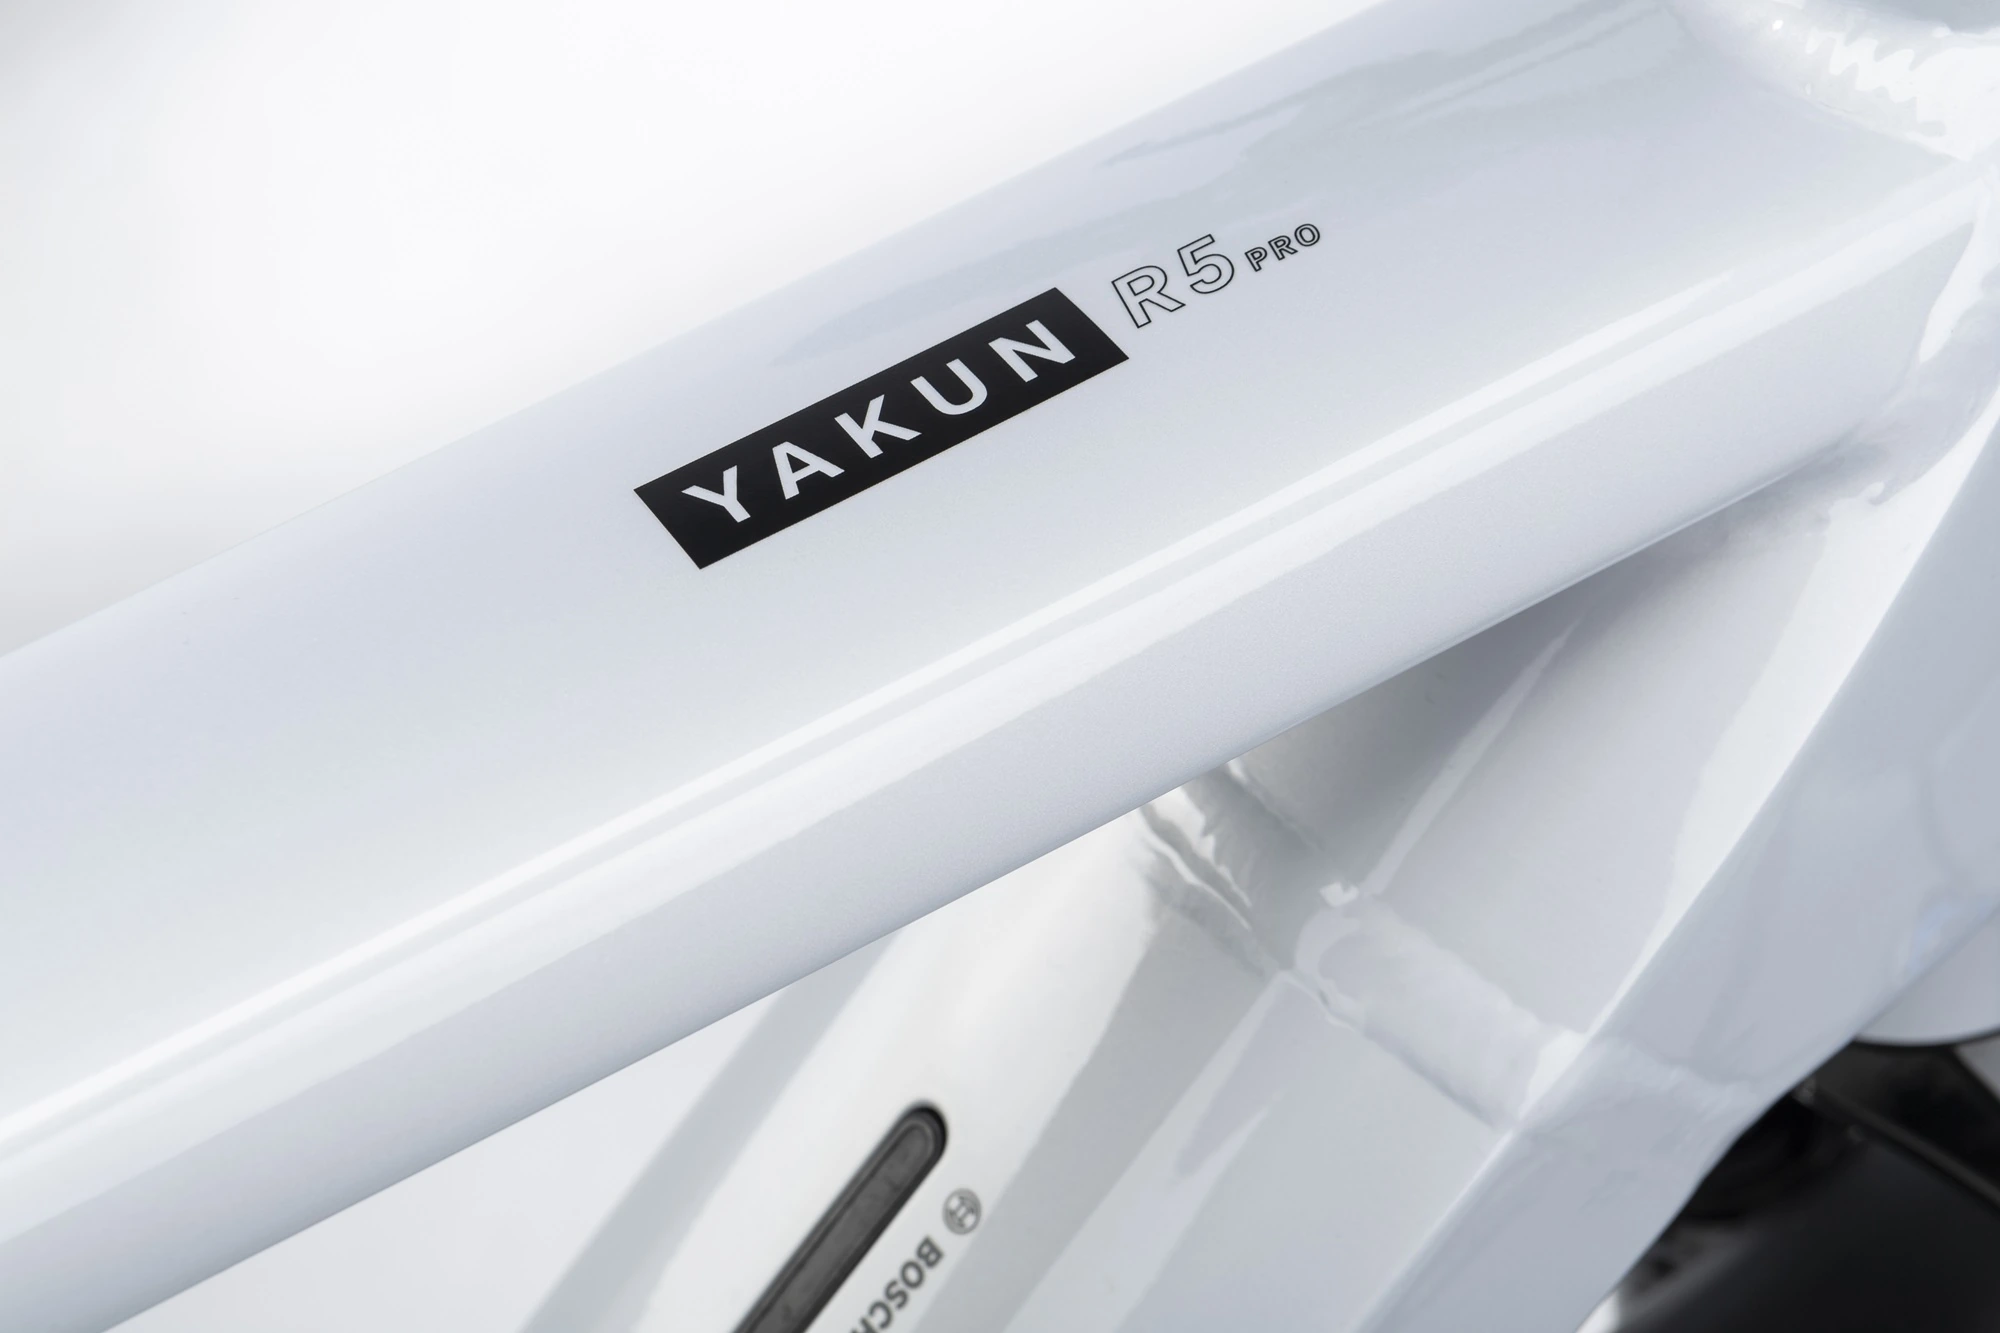 Winora Yakun R5 Pro Hybrid Electric Bike Mens Bosch mid drive 27.5 Inch 45cm